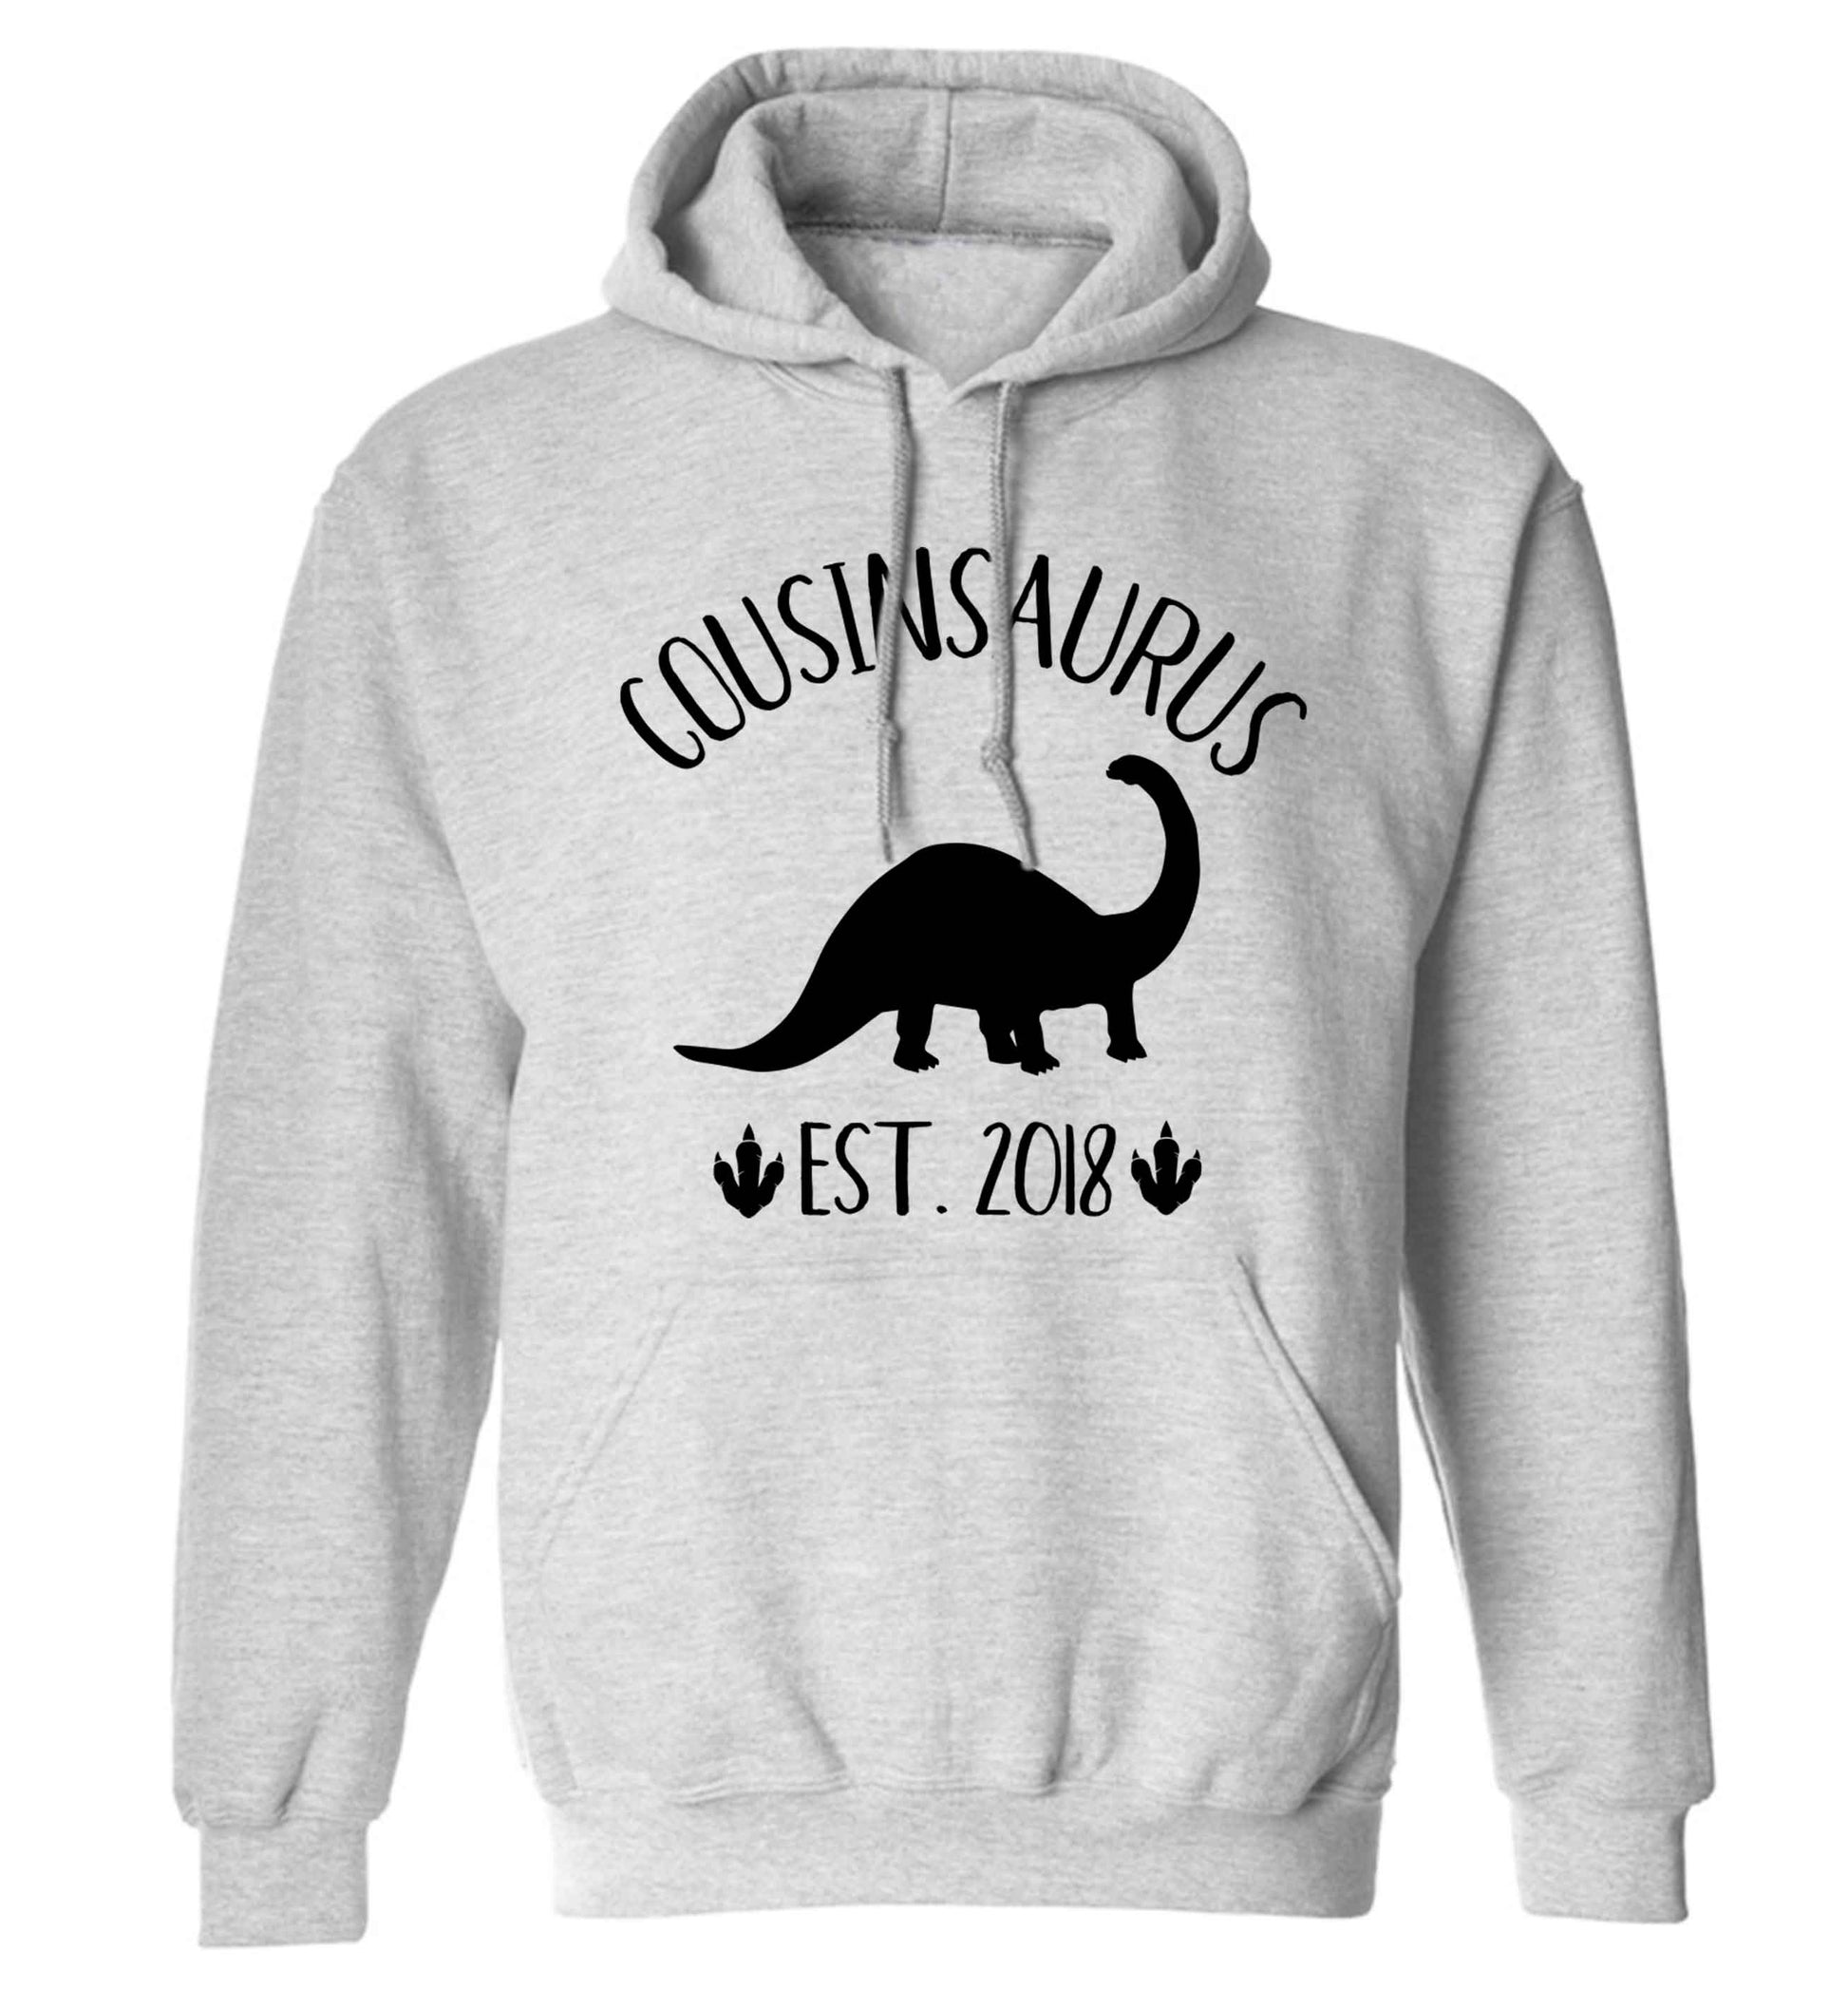 Personalised cousinsaurus since (custom date) adults unisex grey hoodie 2XL